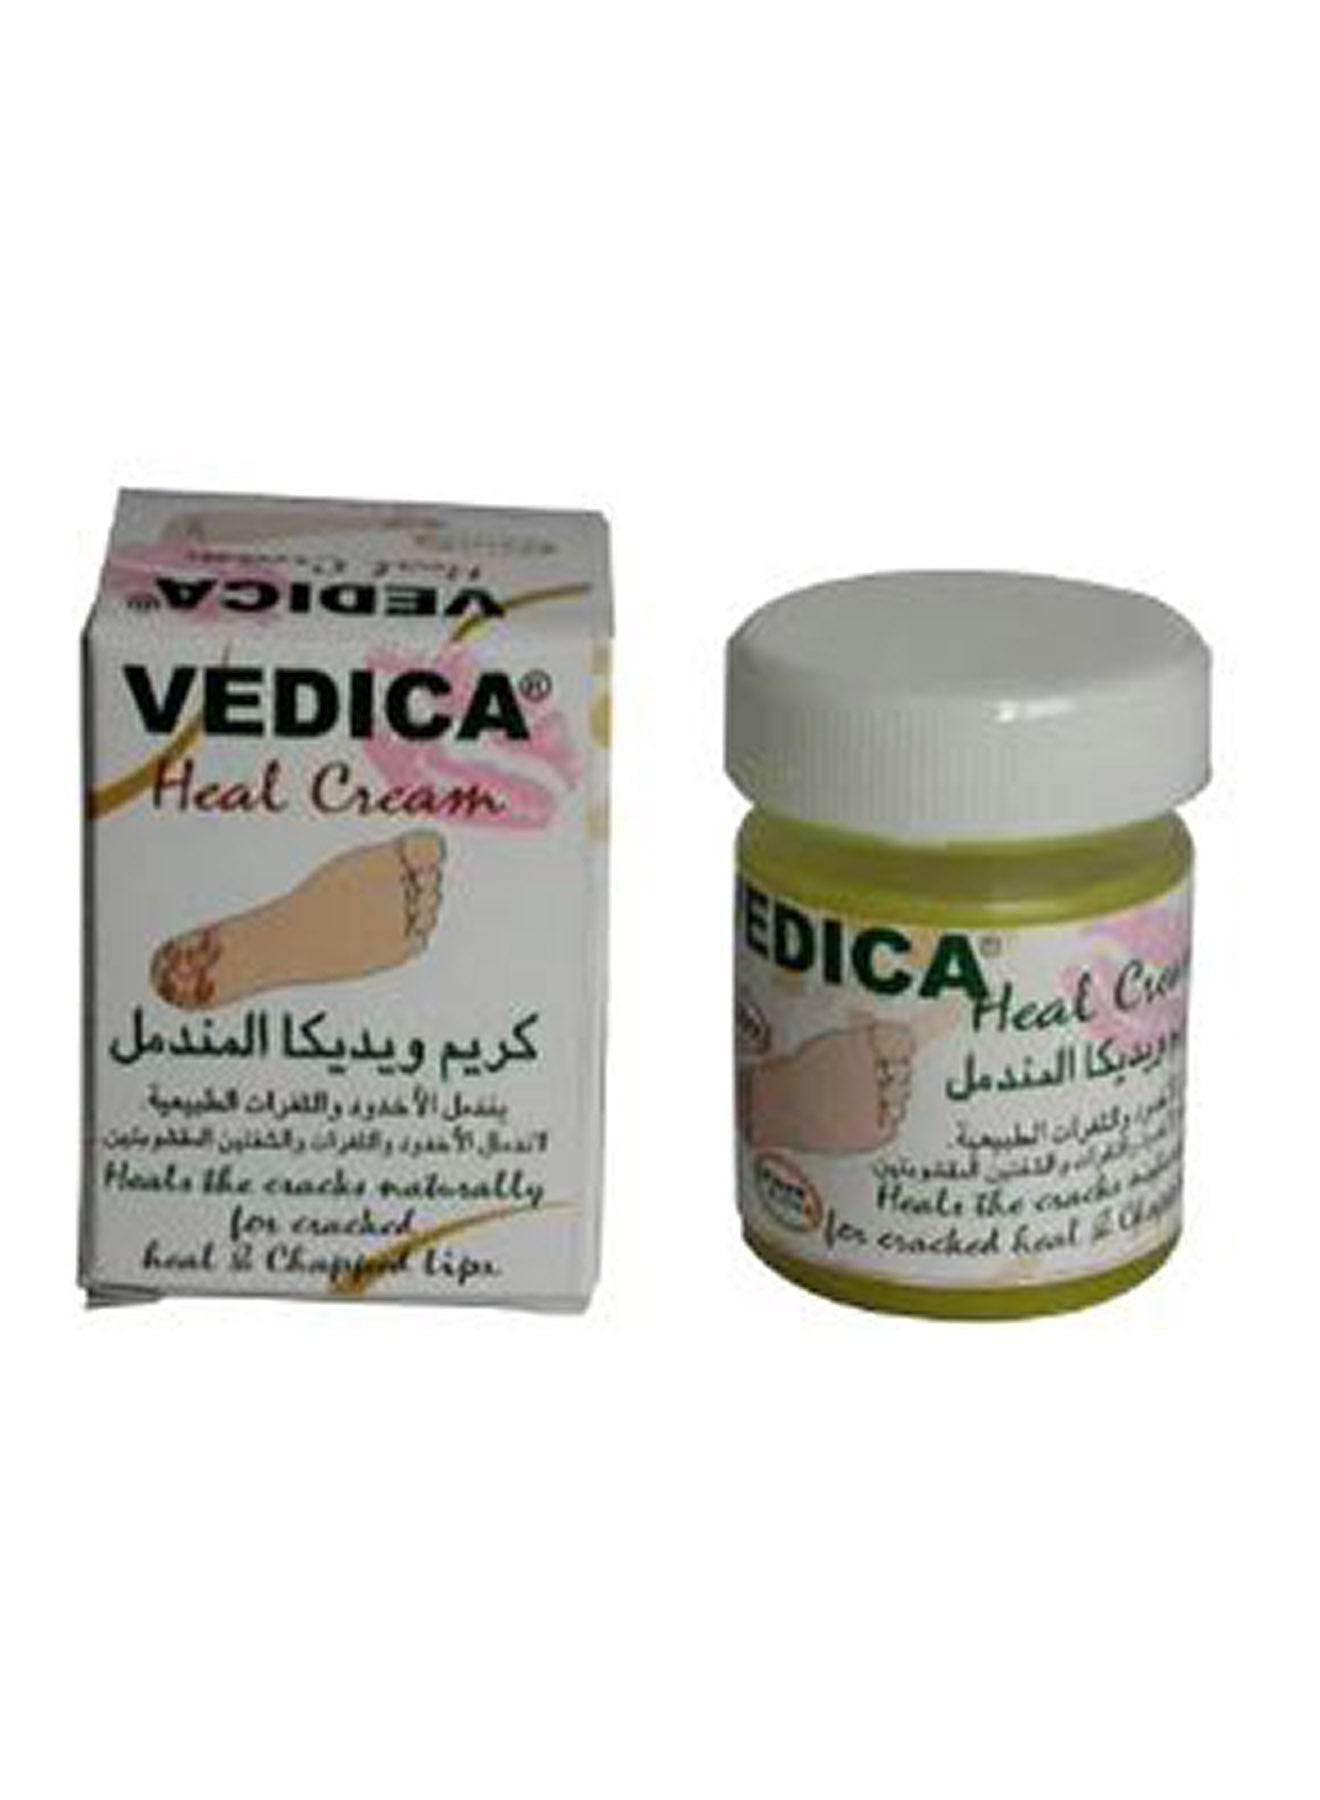 Vedica Heal Cream 20gm Value Pack of 12 